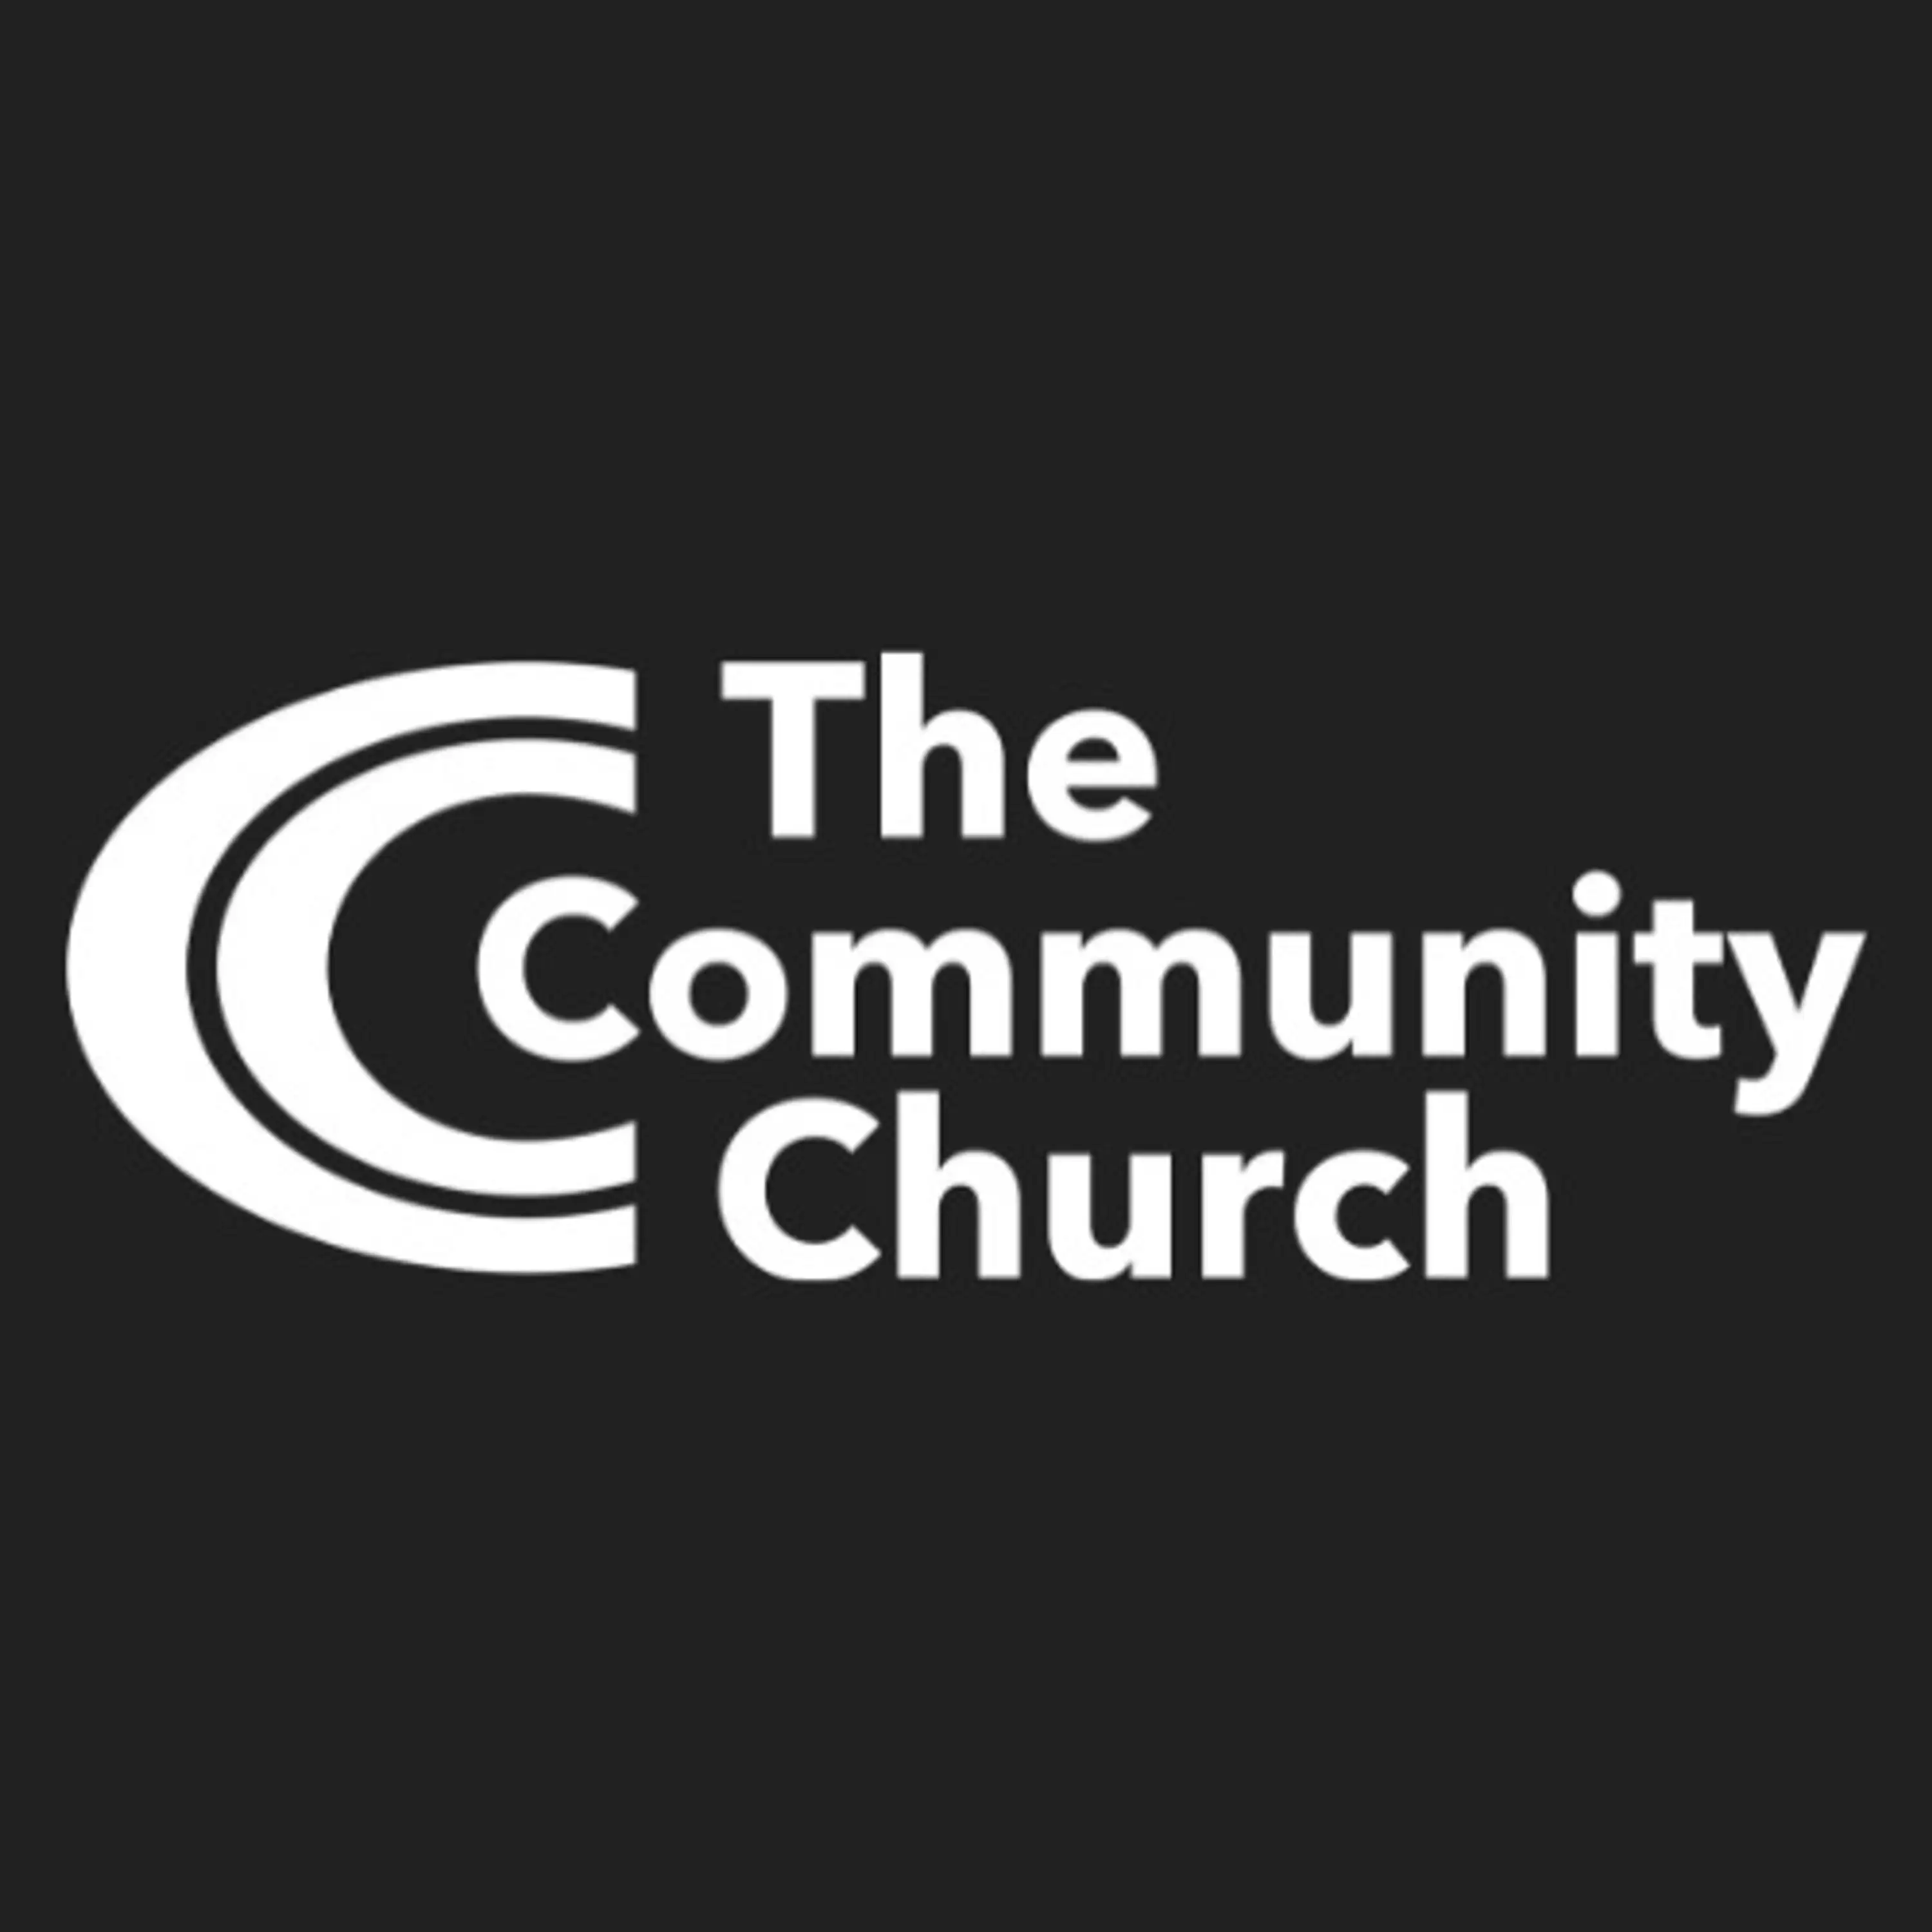 The Community Church: Sermons and teaching